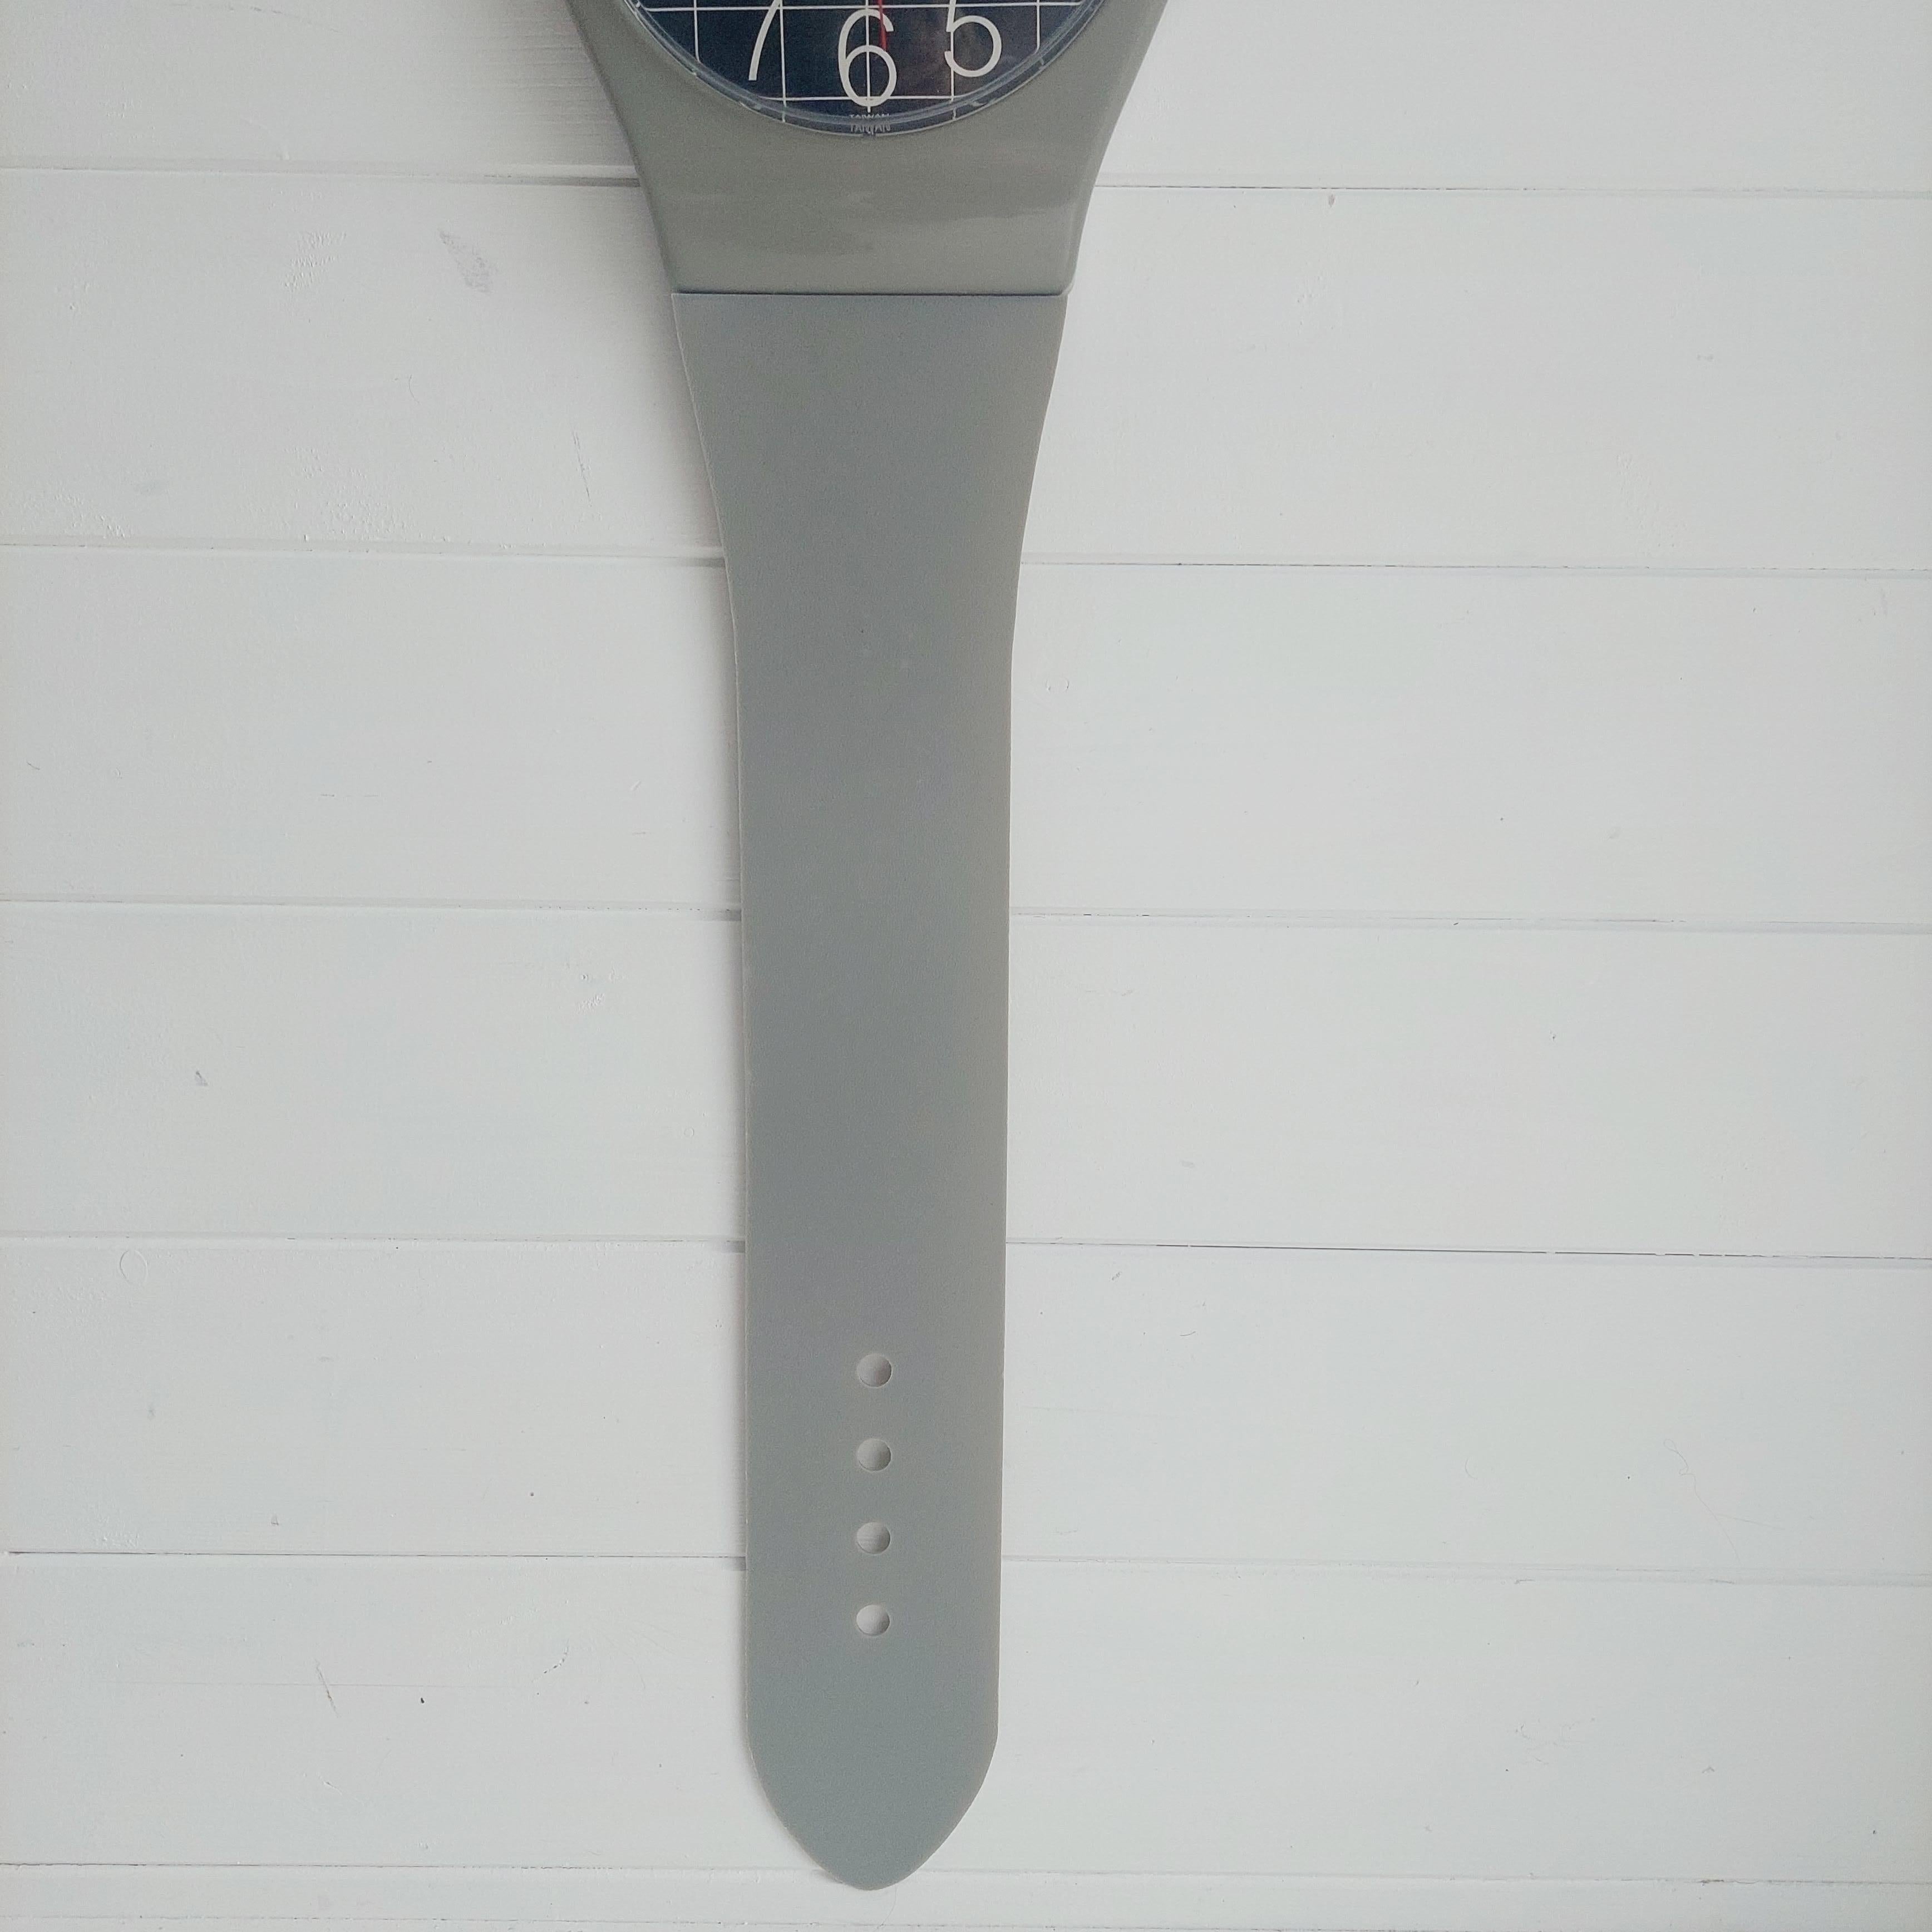 Plastic 80s Postmodern memphis age XL Wall clock  wristwatch style